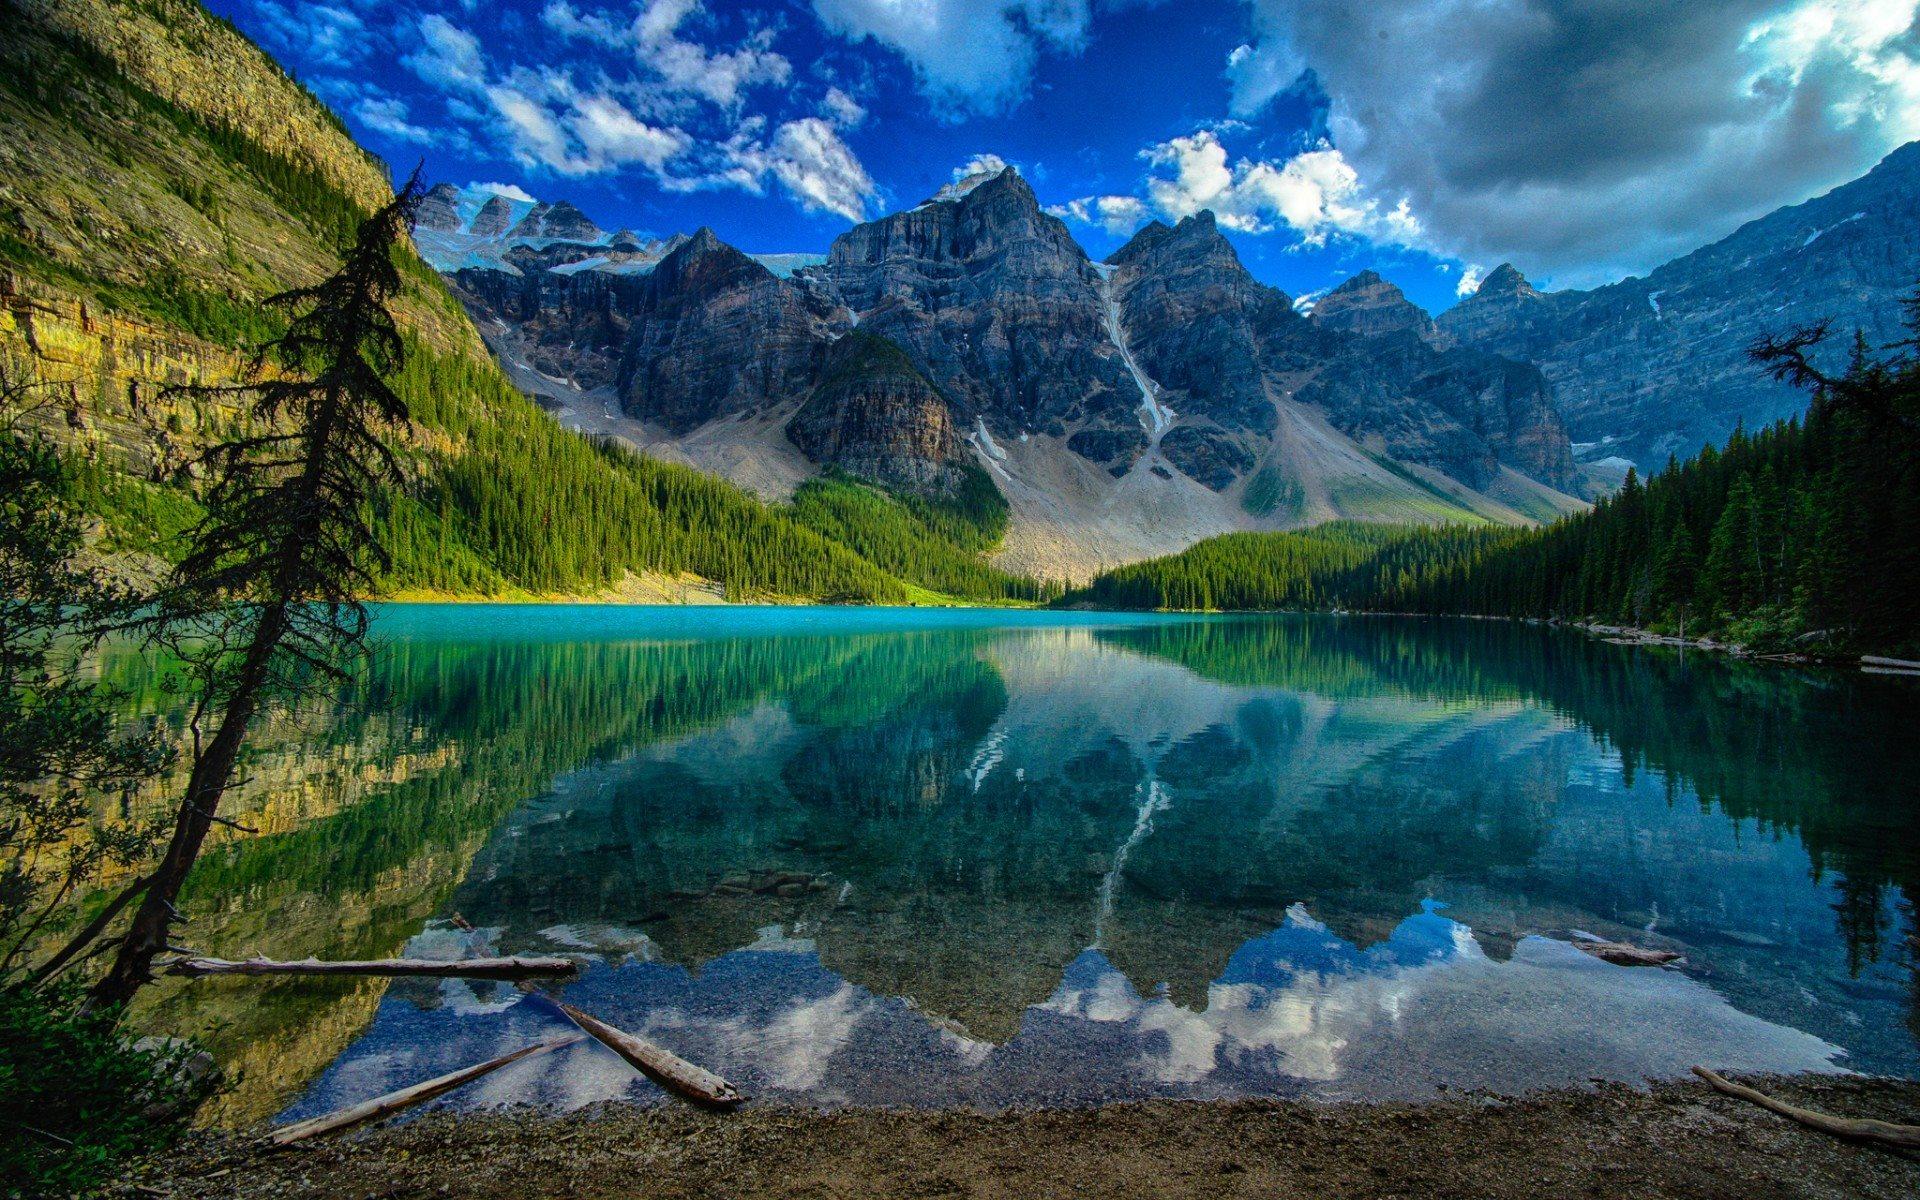 Download wallpaper mountain landscape, photo lakes, beautiful lake